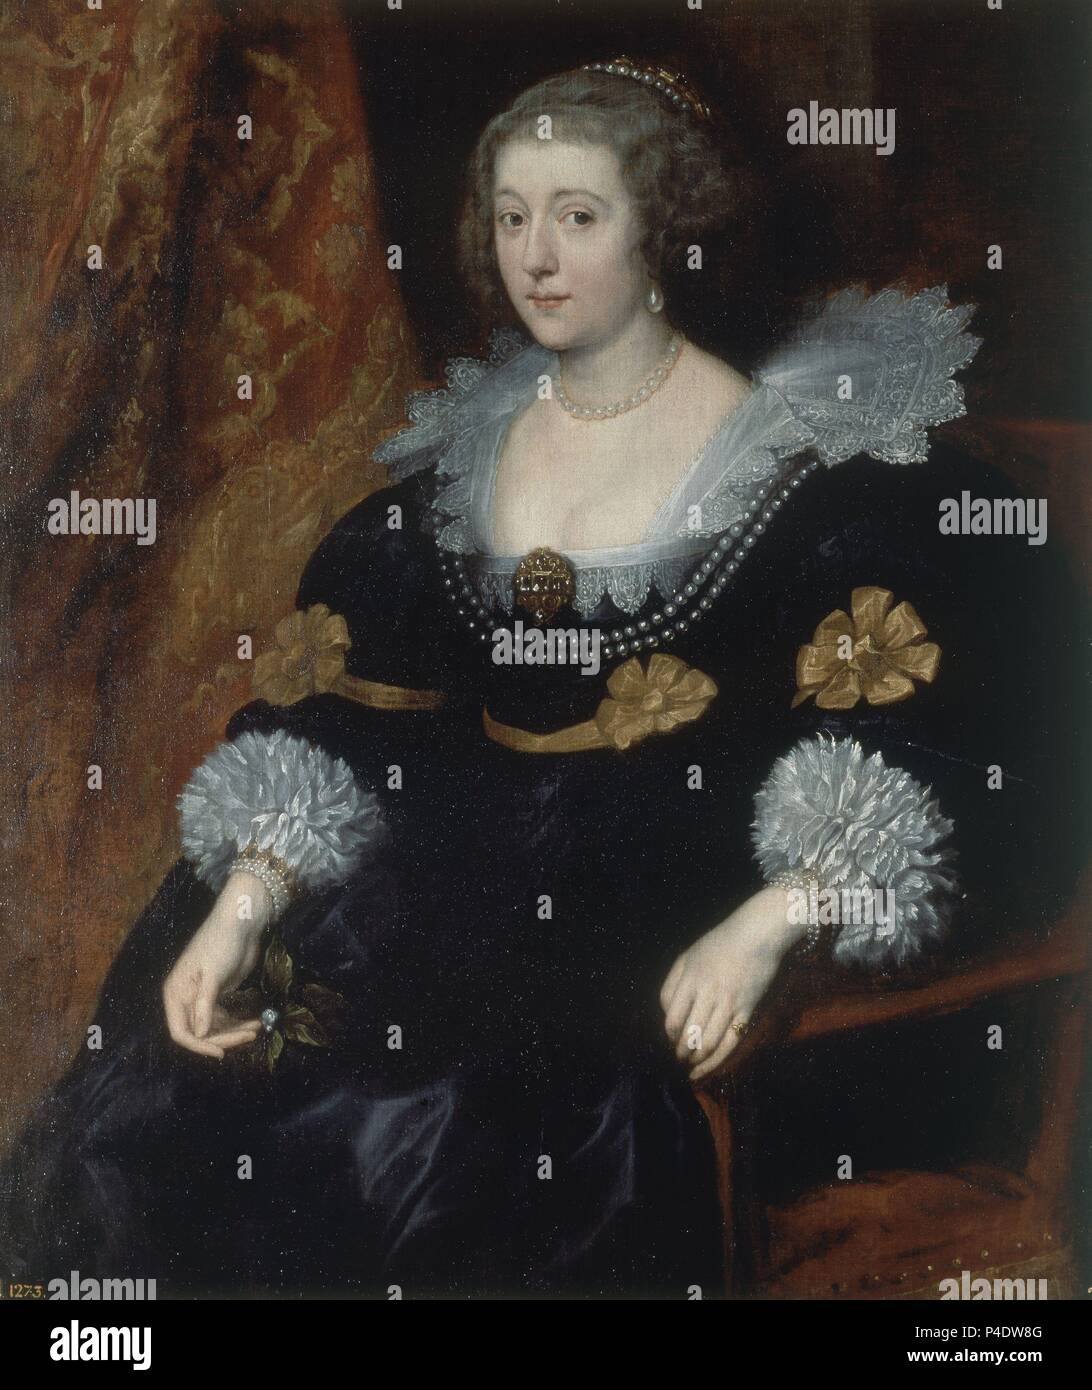 AMALIA DE SOLMS-BRAUNFELS - 1628 - OLEO/LIENZO/TABLA - 105 x 91 cm - NP 1483 - ESCUELA FLAMENCA. Auteur : Anthony Van Dyck (1599-1641). Emplacement : Museo del Prado-PINTURA, MADRID, ESPAGNE. Banque D'Images